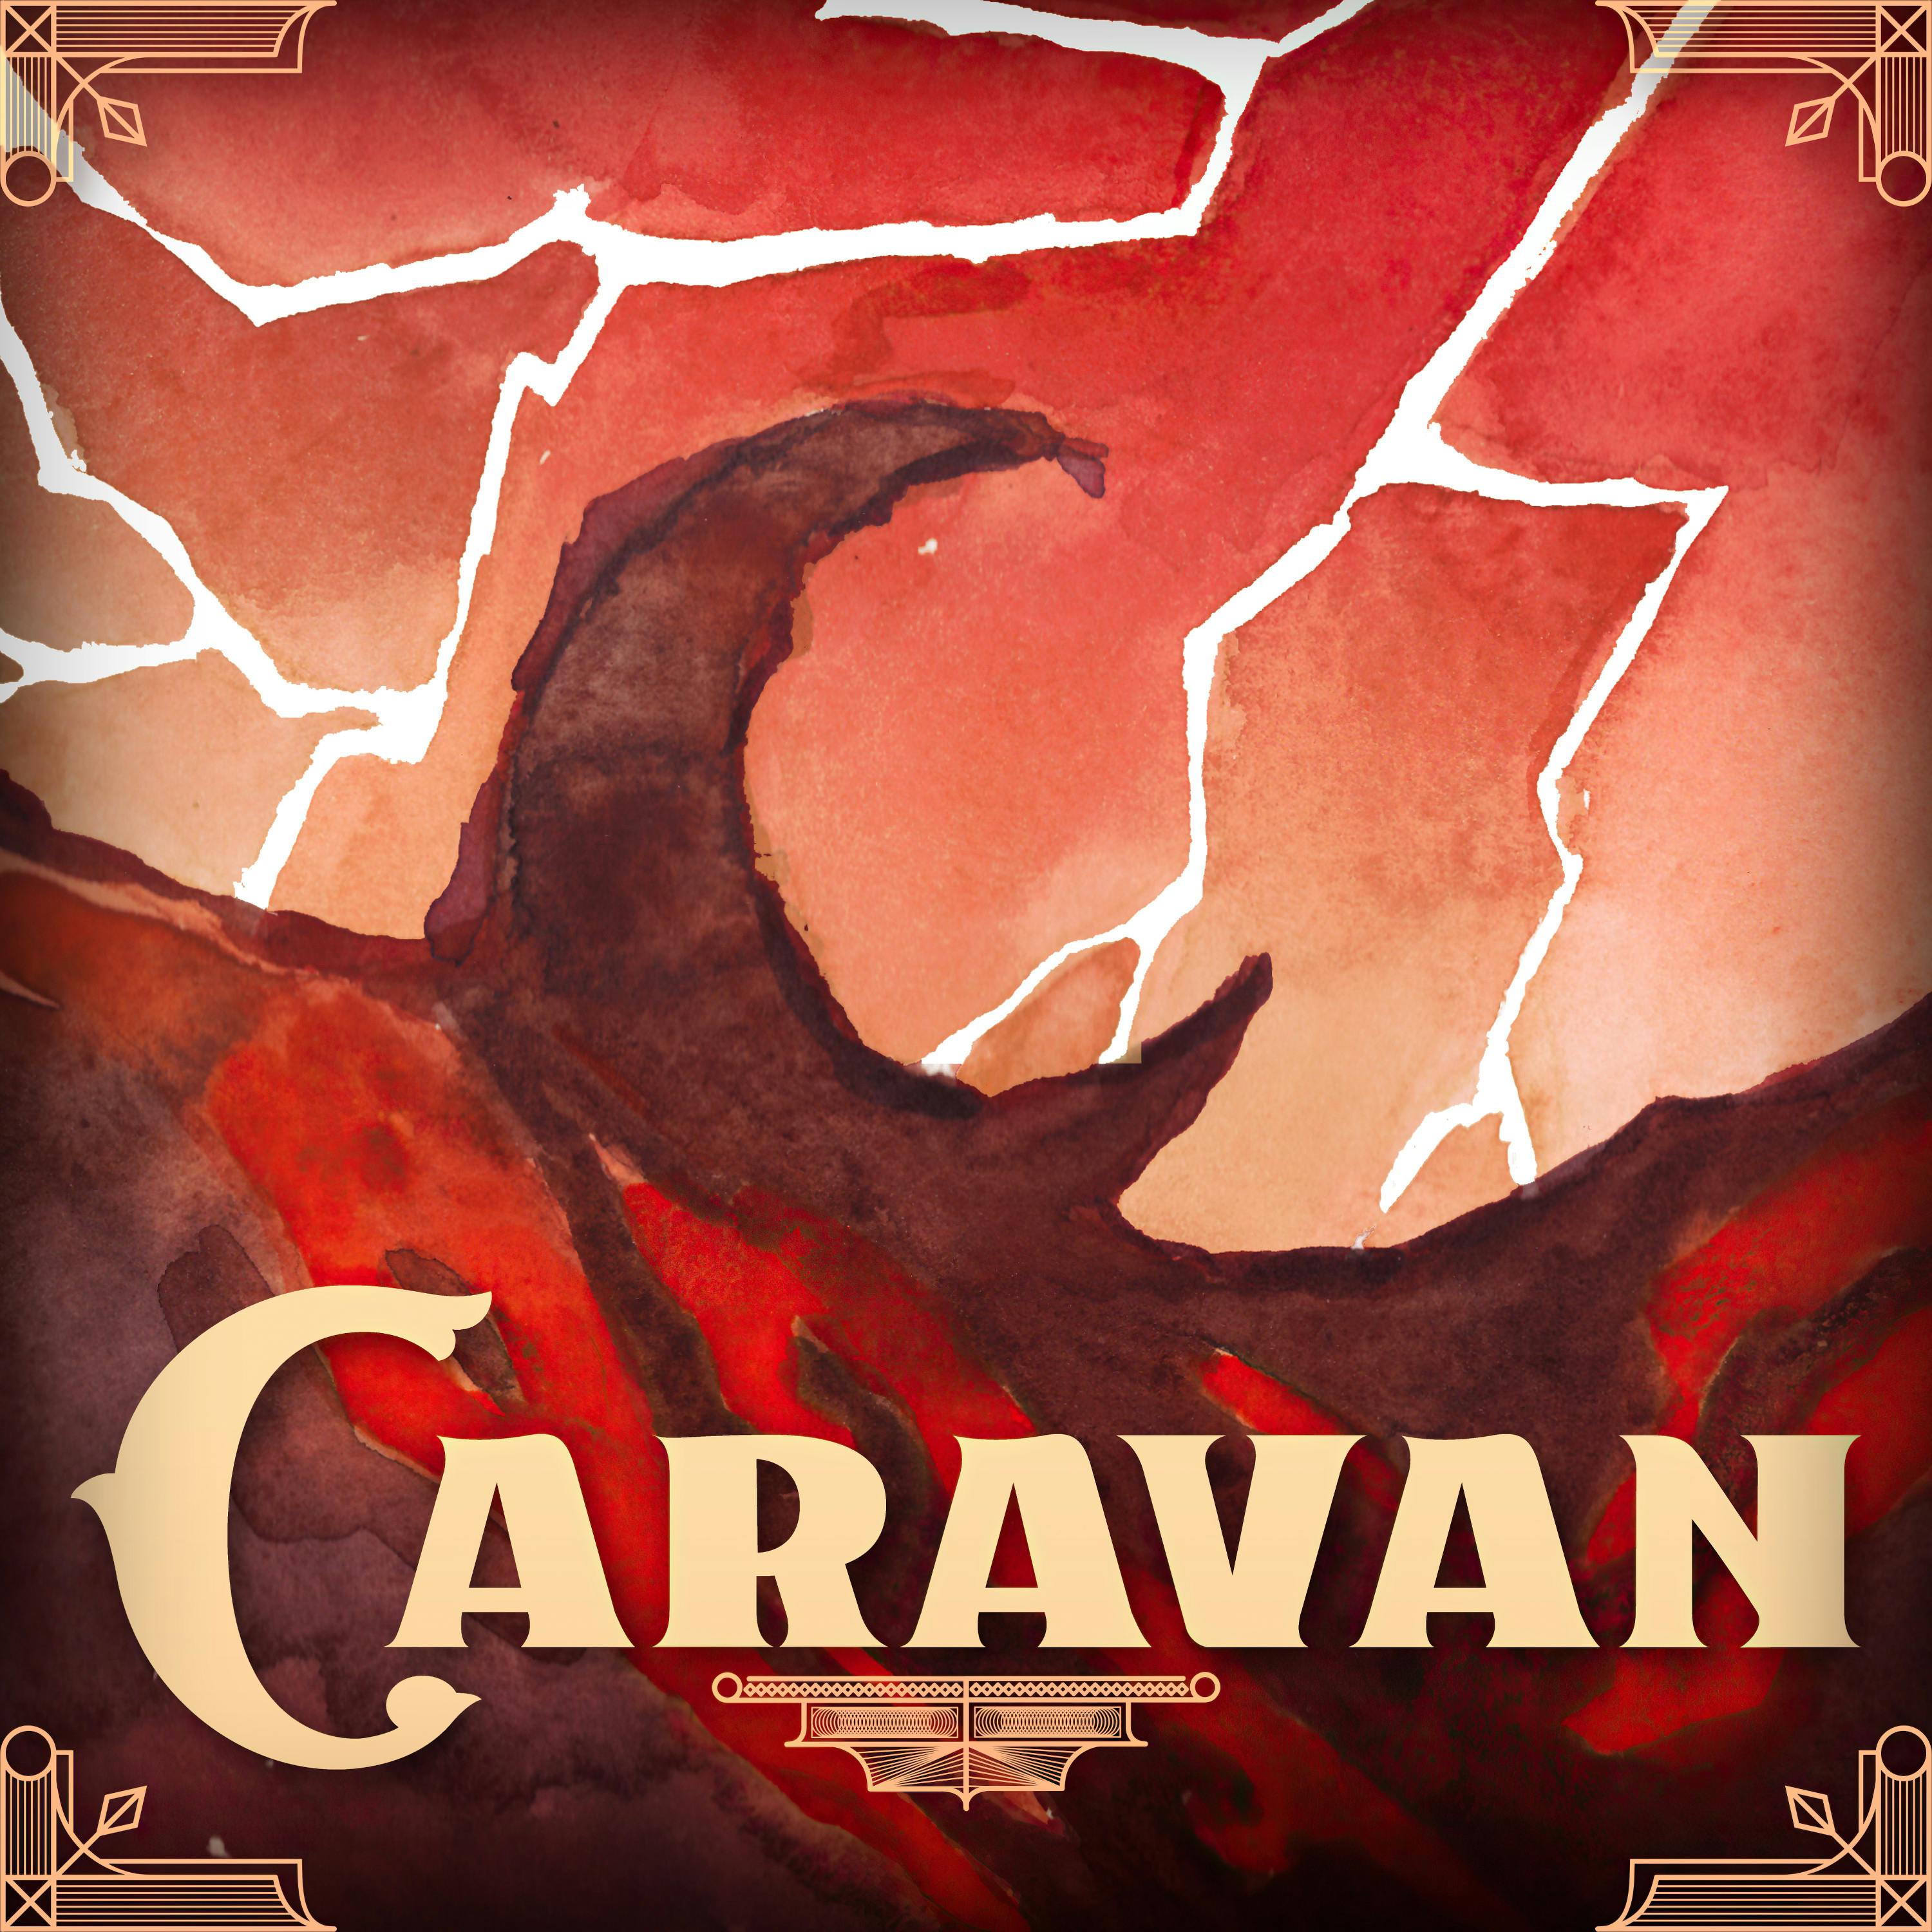 "CARAVAN" Podcast